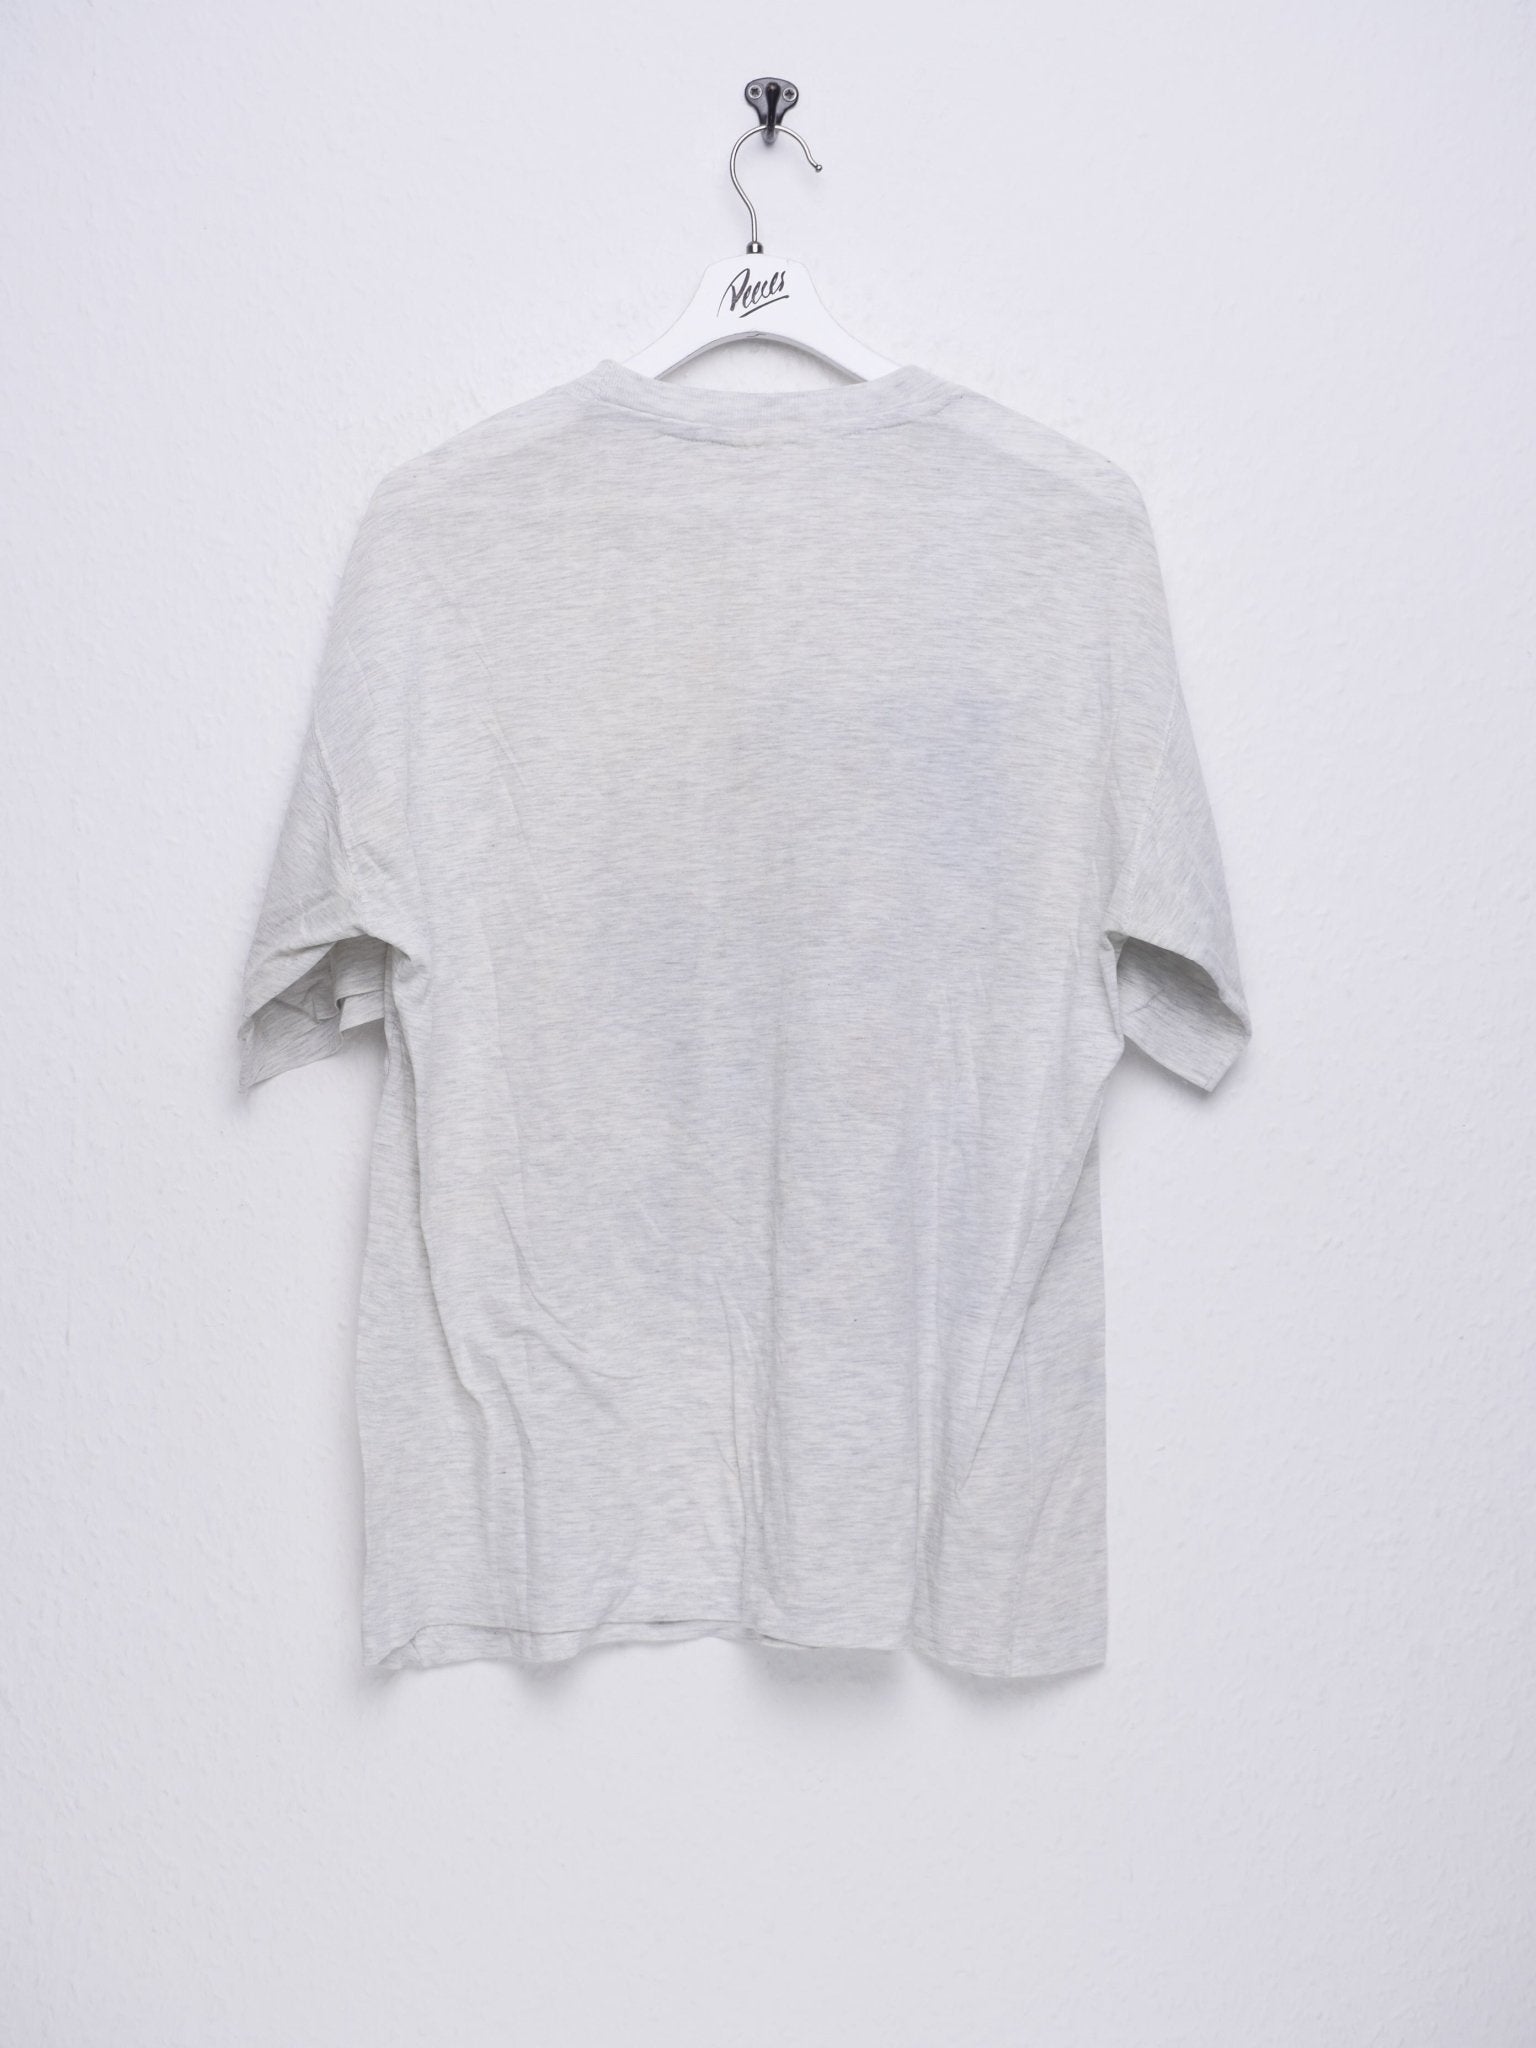 printed Graphic light grey Shirt - Peeces